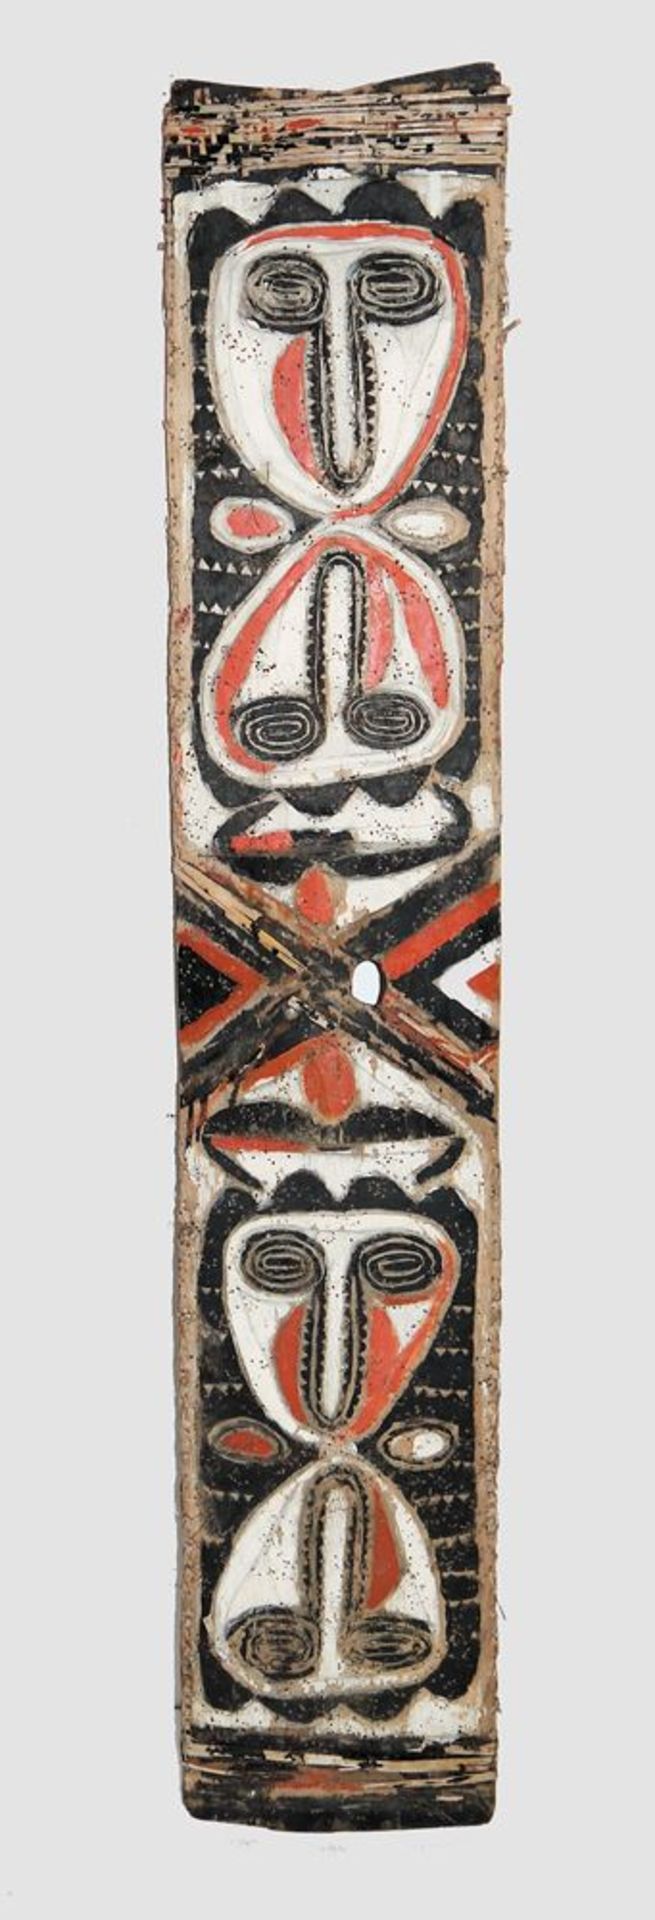 East New Britain ceremonial shield, Melanesia